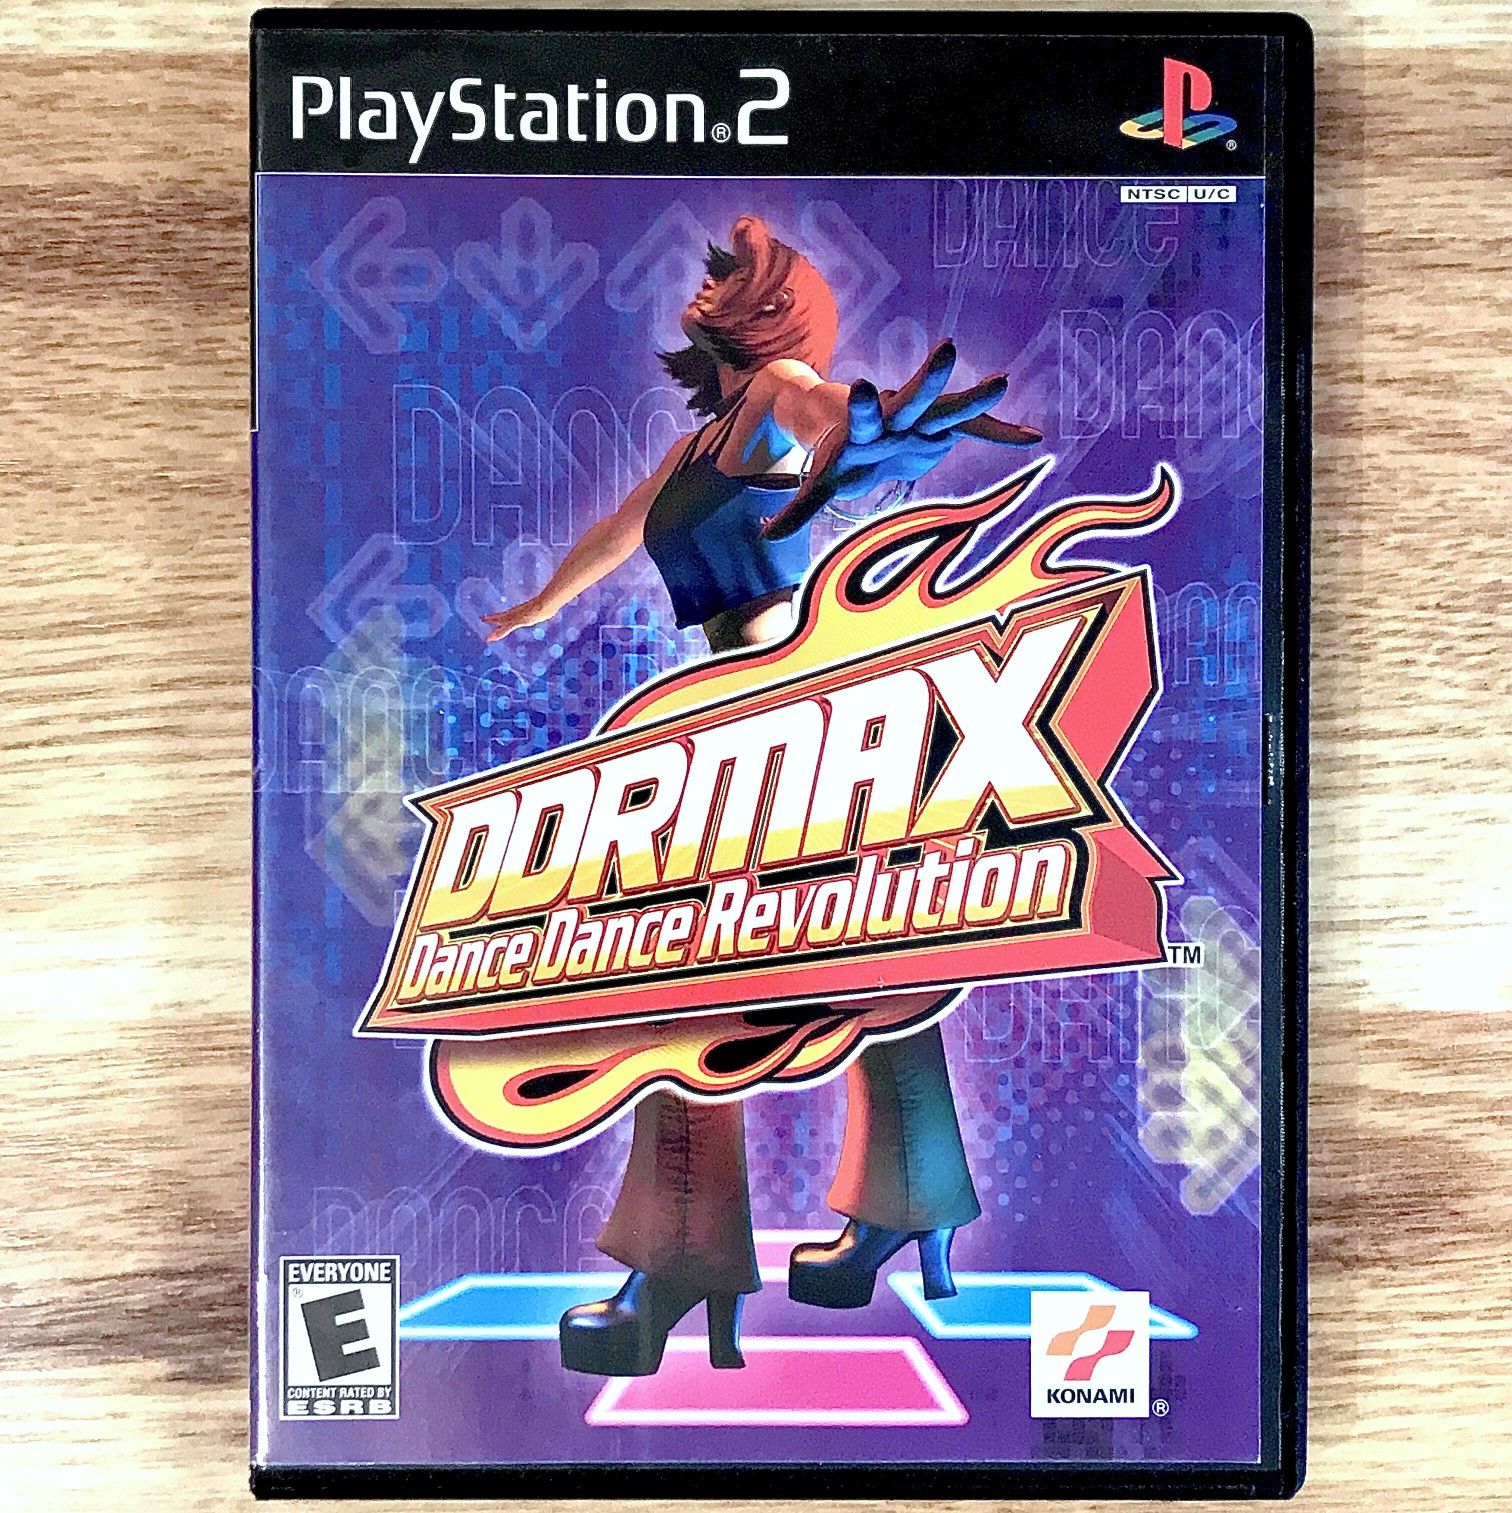 DDRMAX: Dance Dance Revolution PS2 Video Game